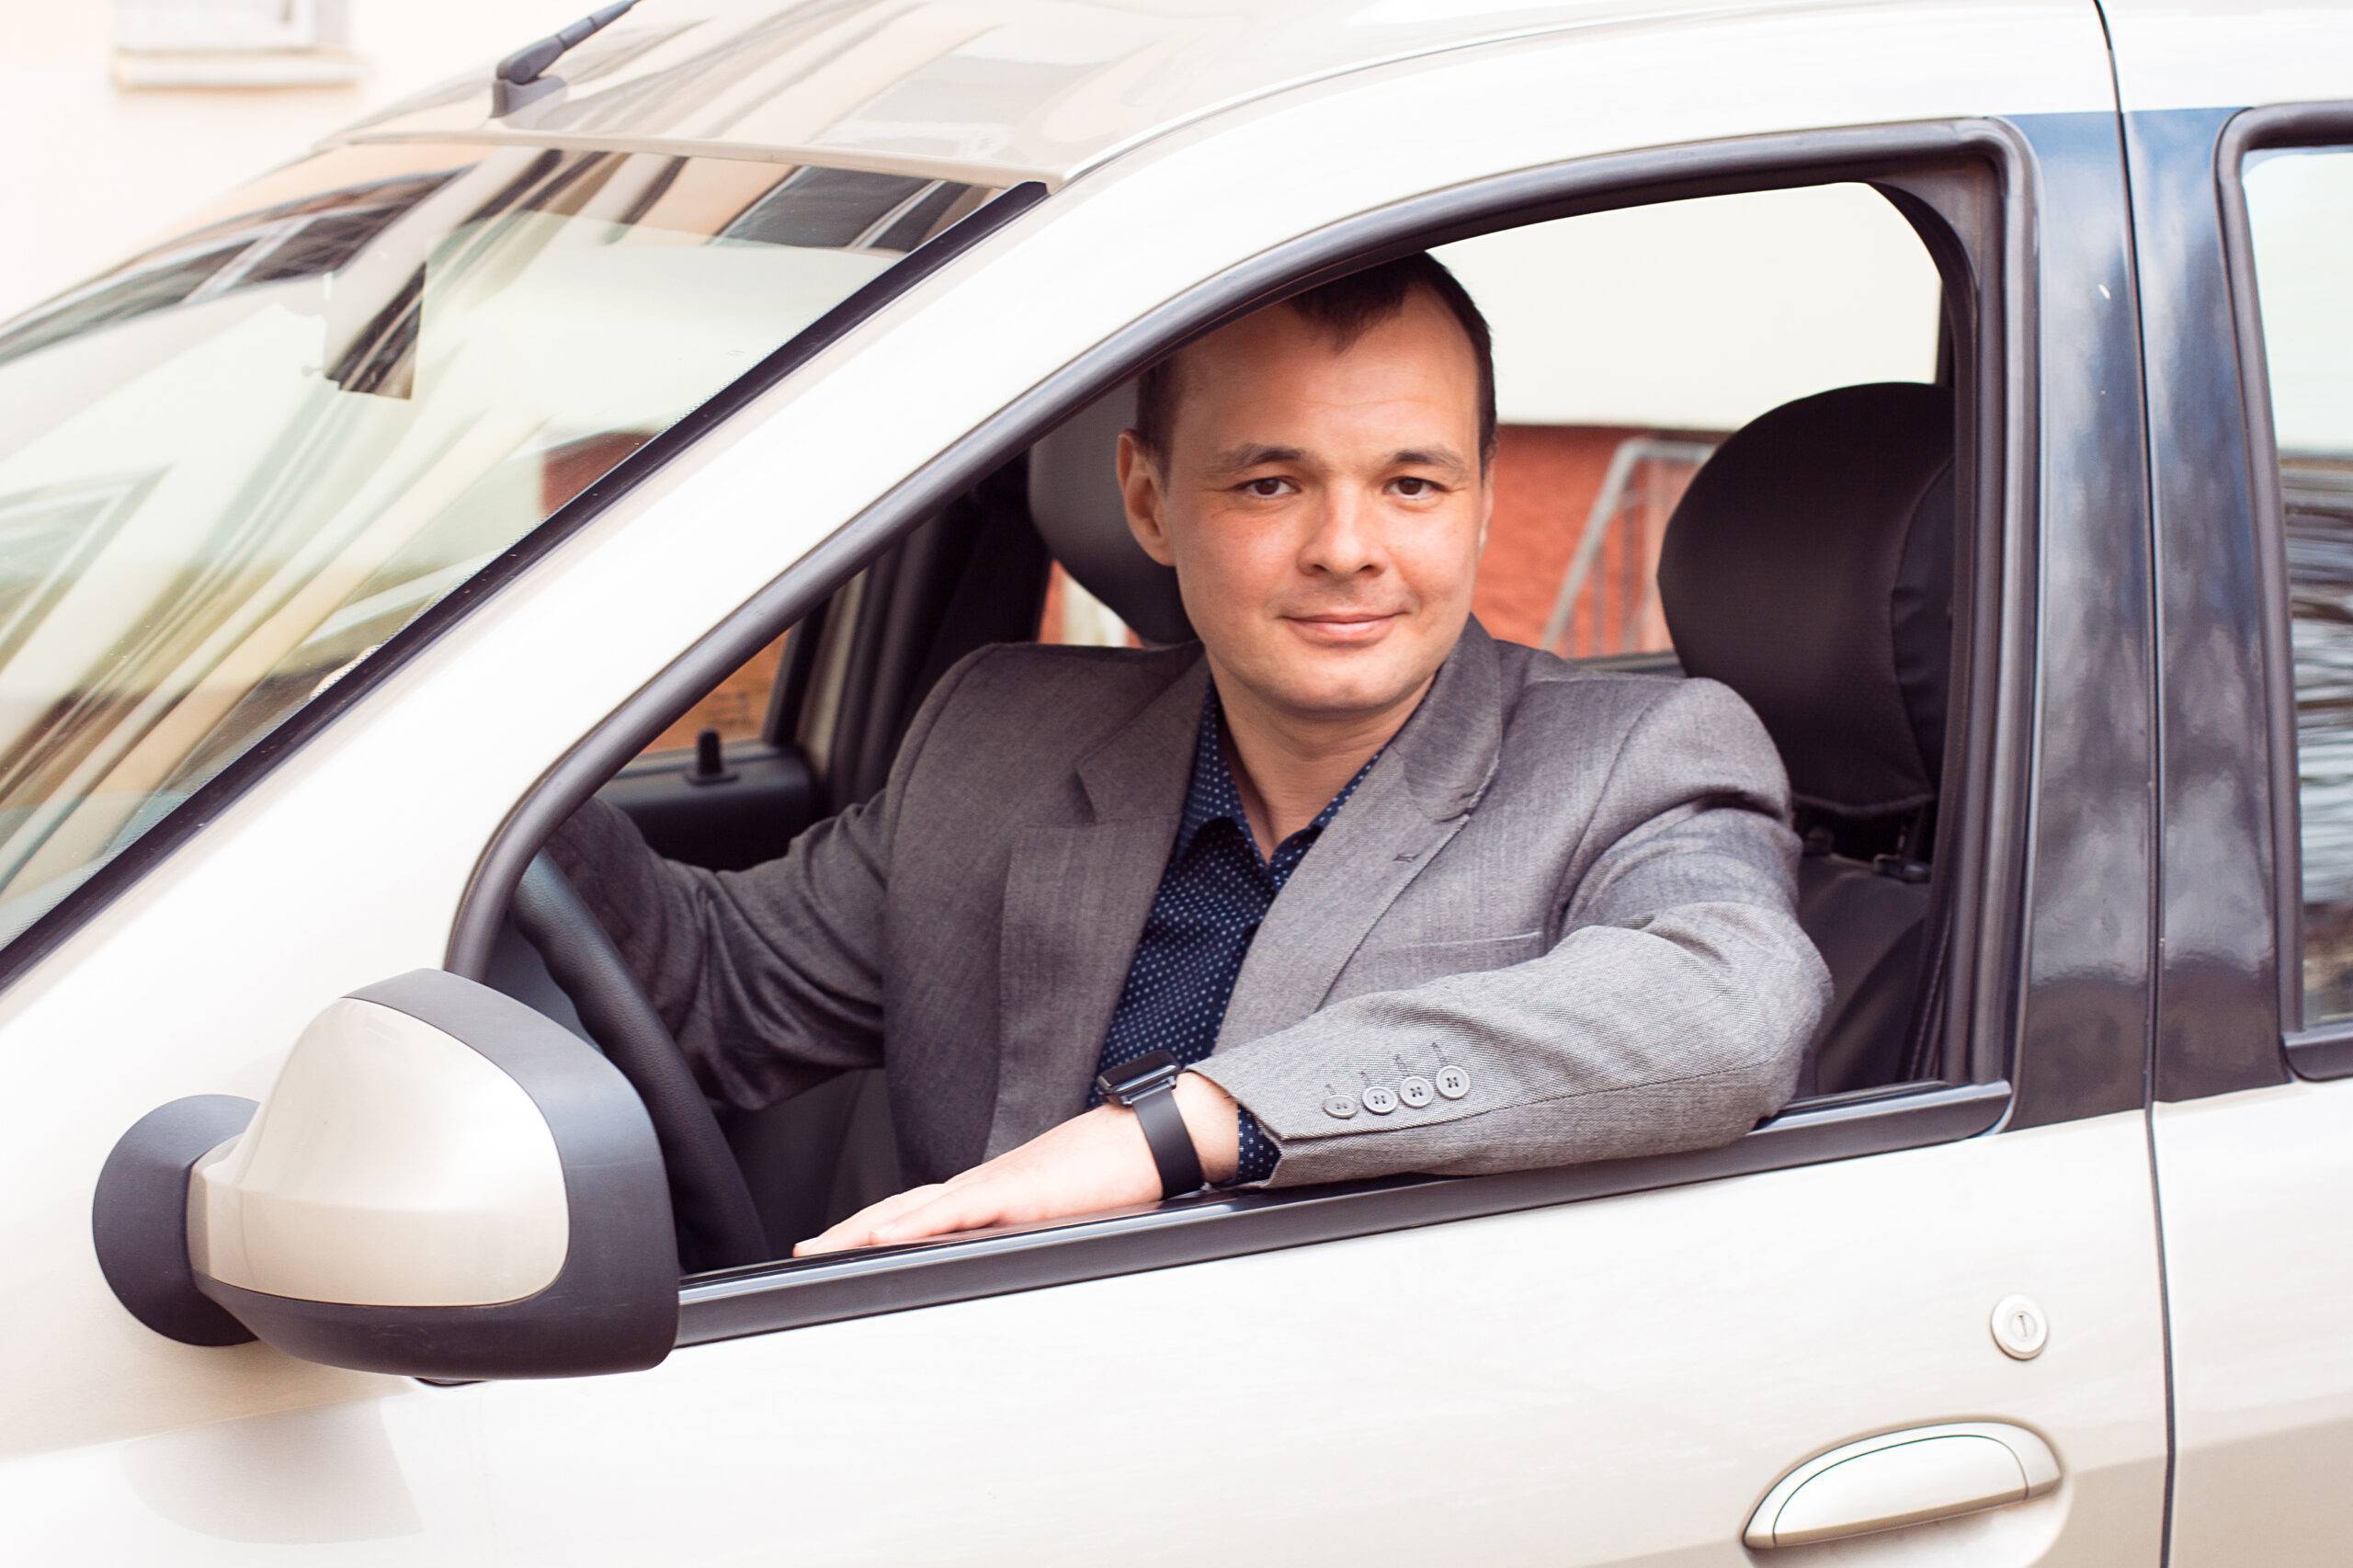 Александр Карловский сидит в автомобиле.